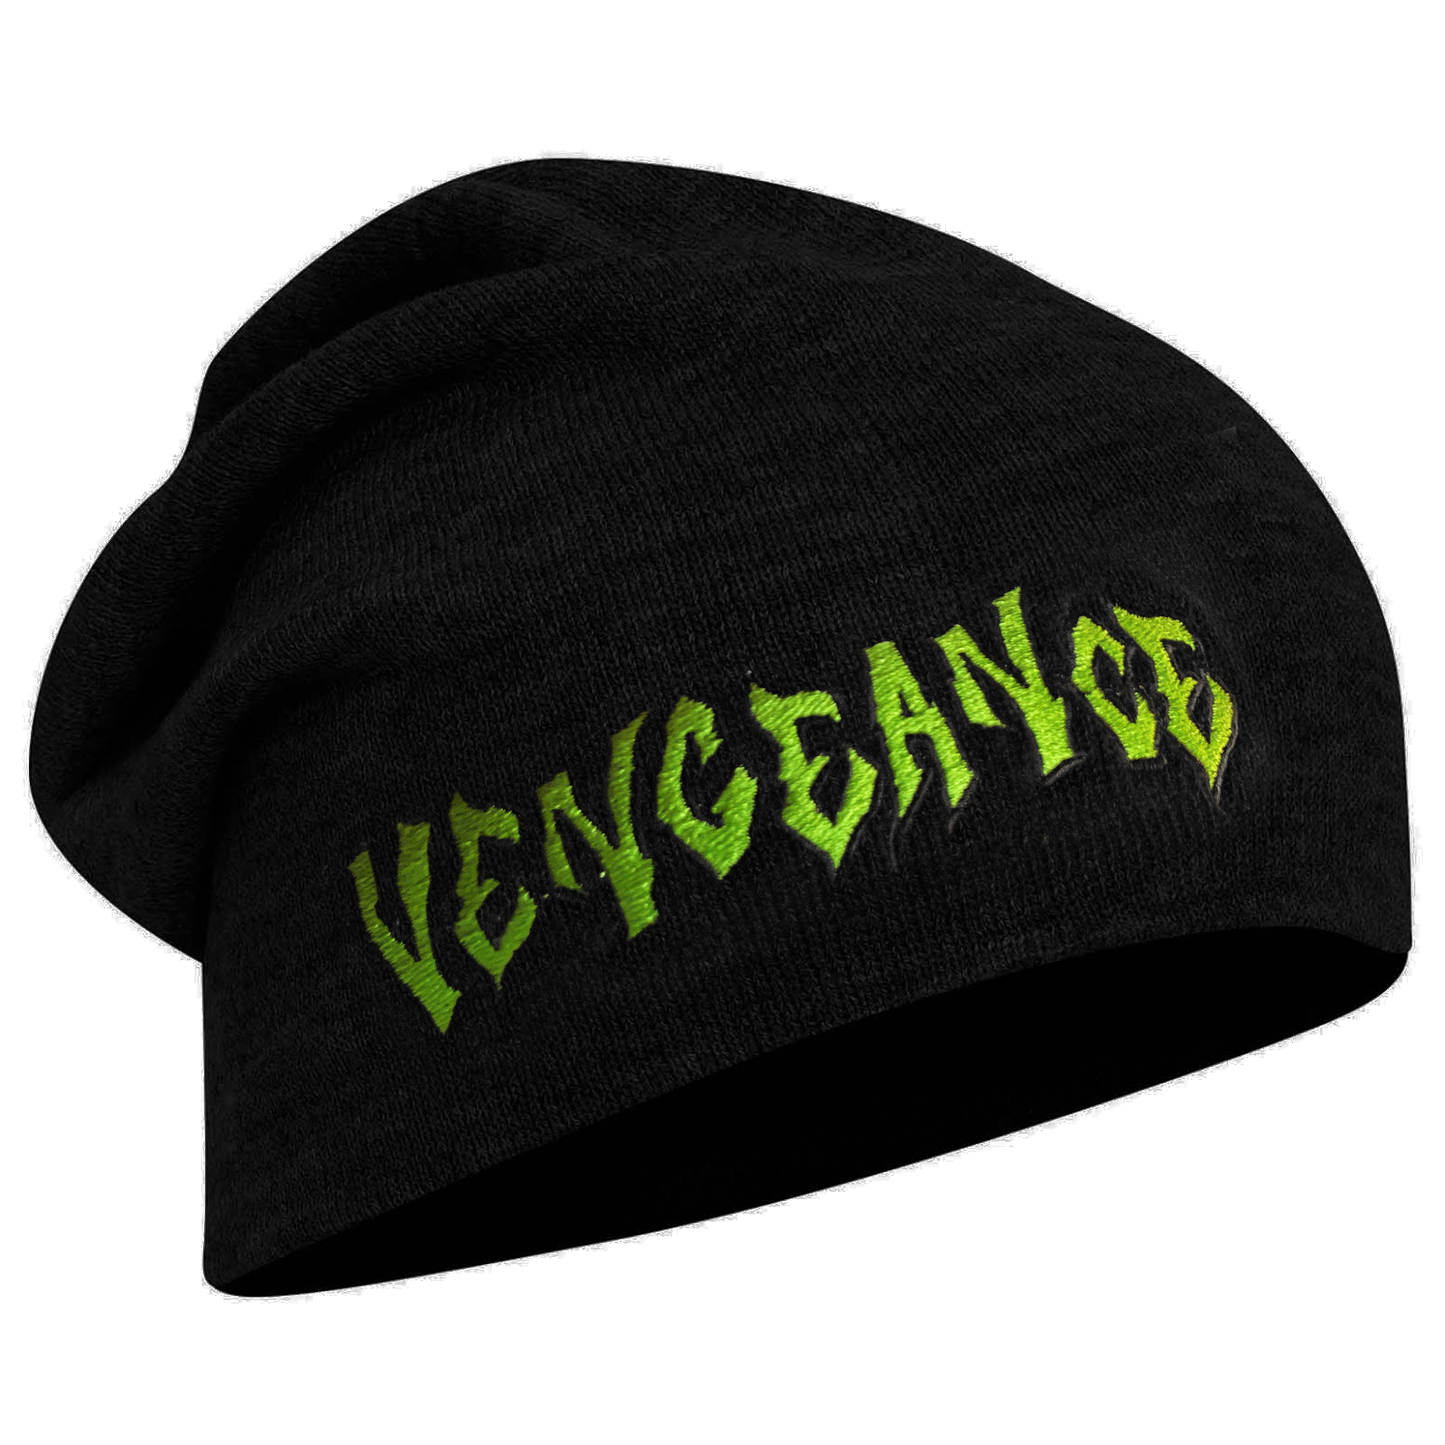 Black Vengeance Beanie - Green Embroidery